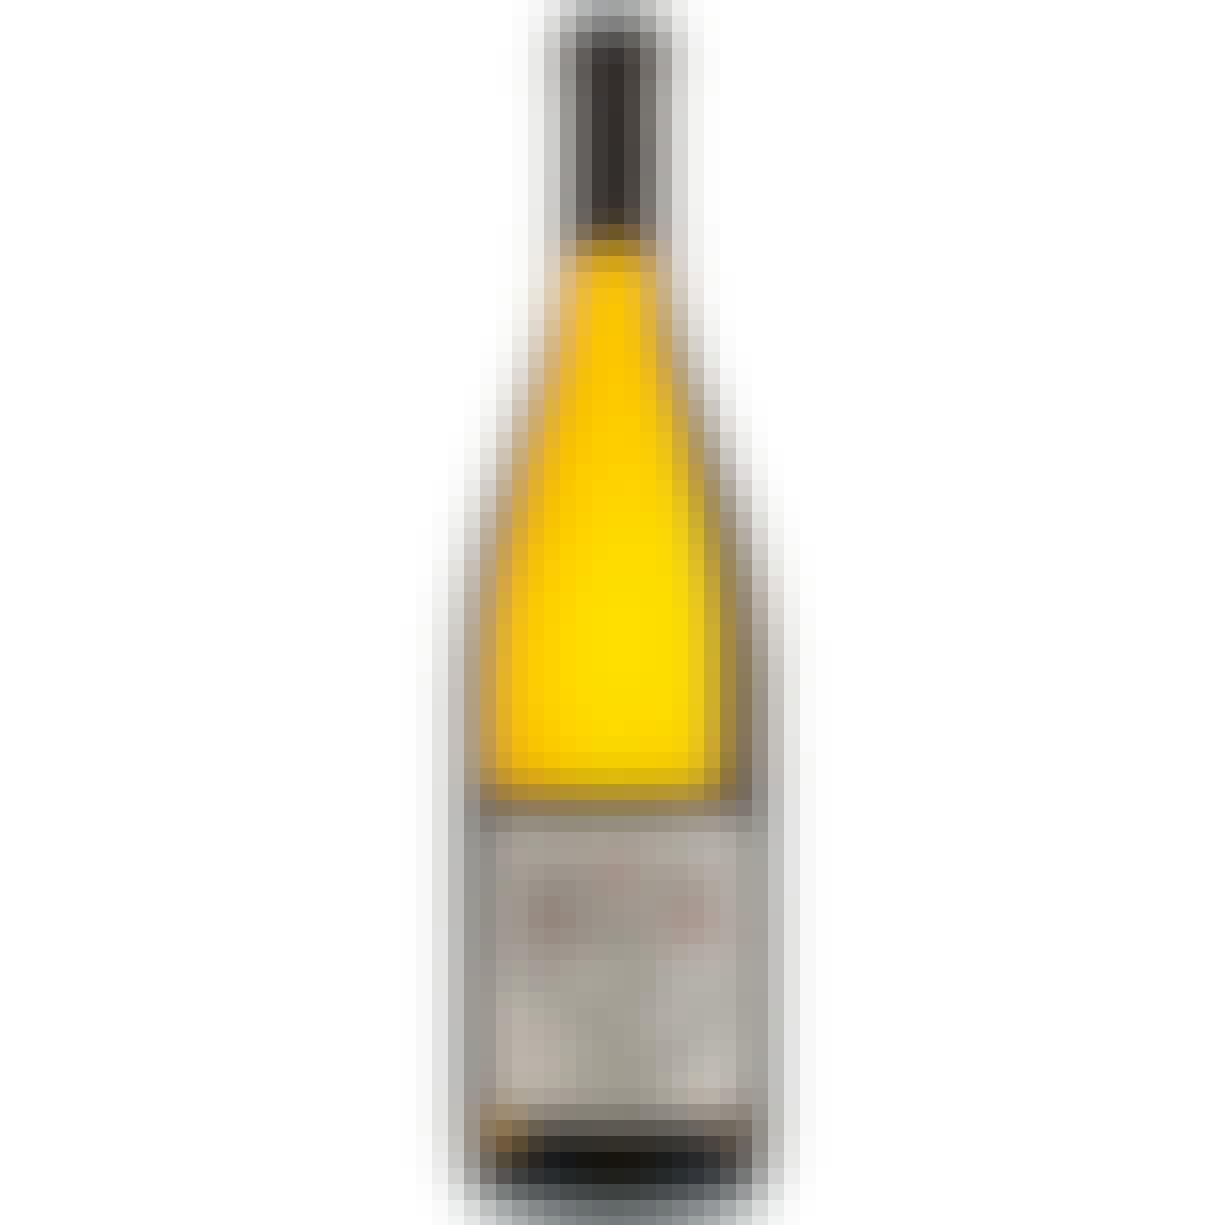 Tyler Santa Barbara County Chardonnay 2015 750ml